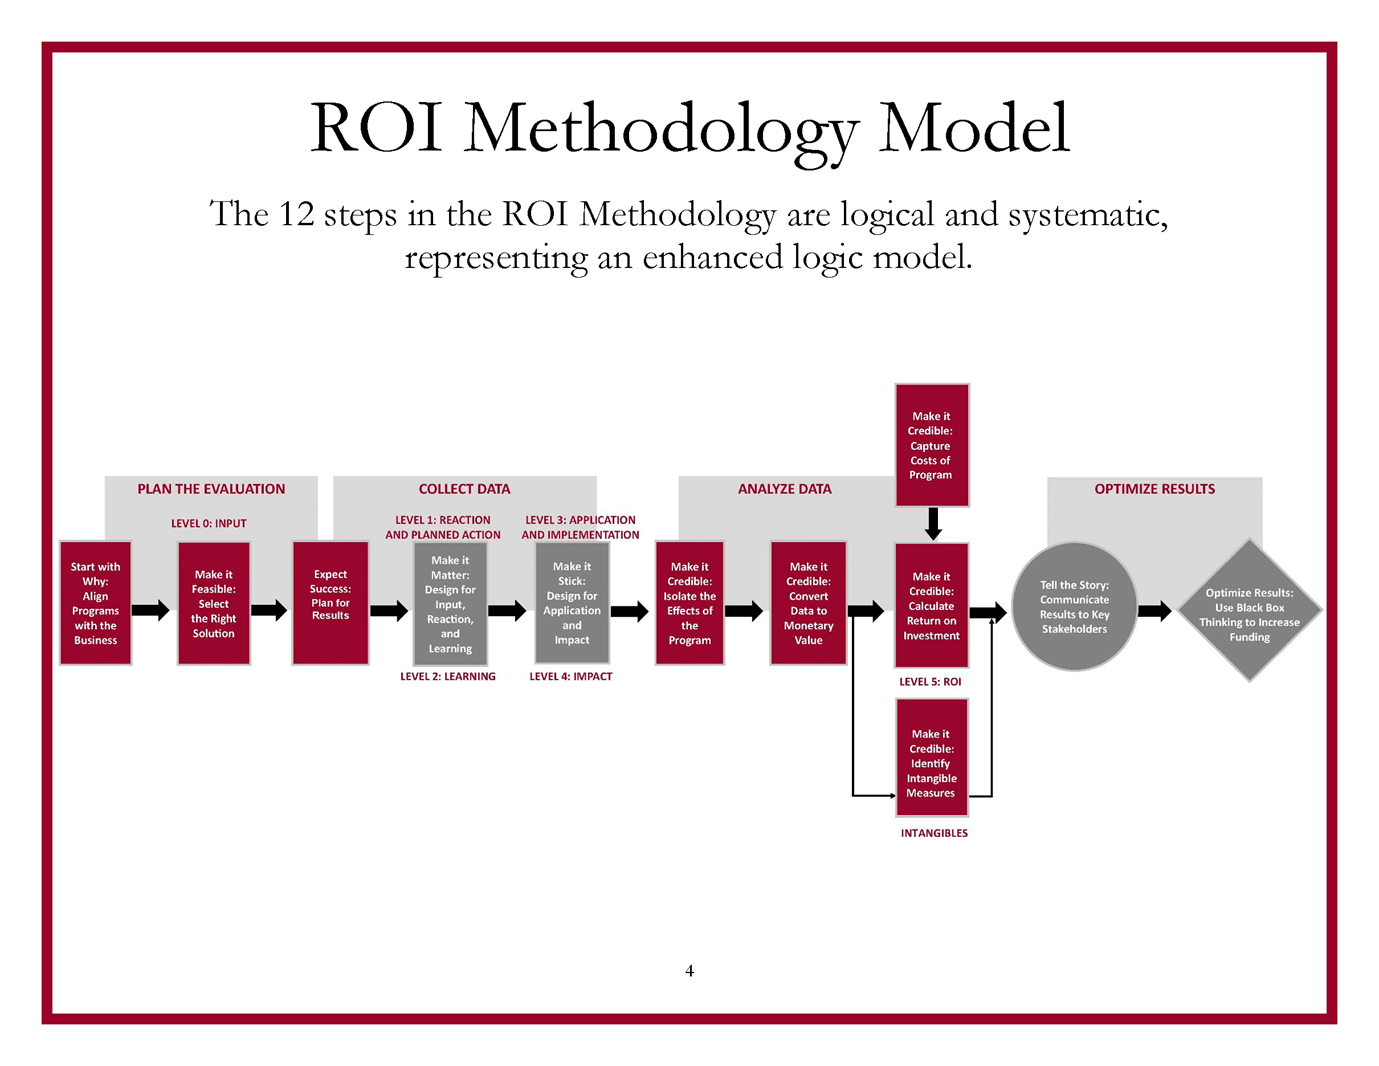 ROI Methodology graphic